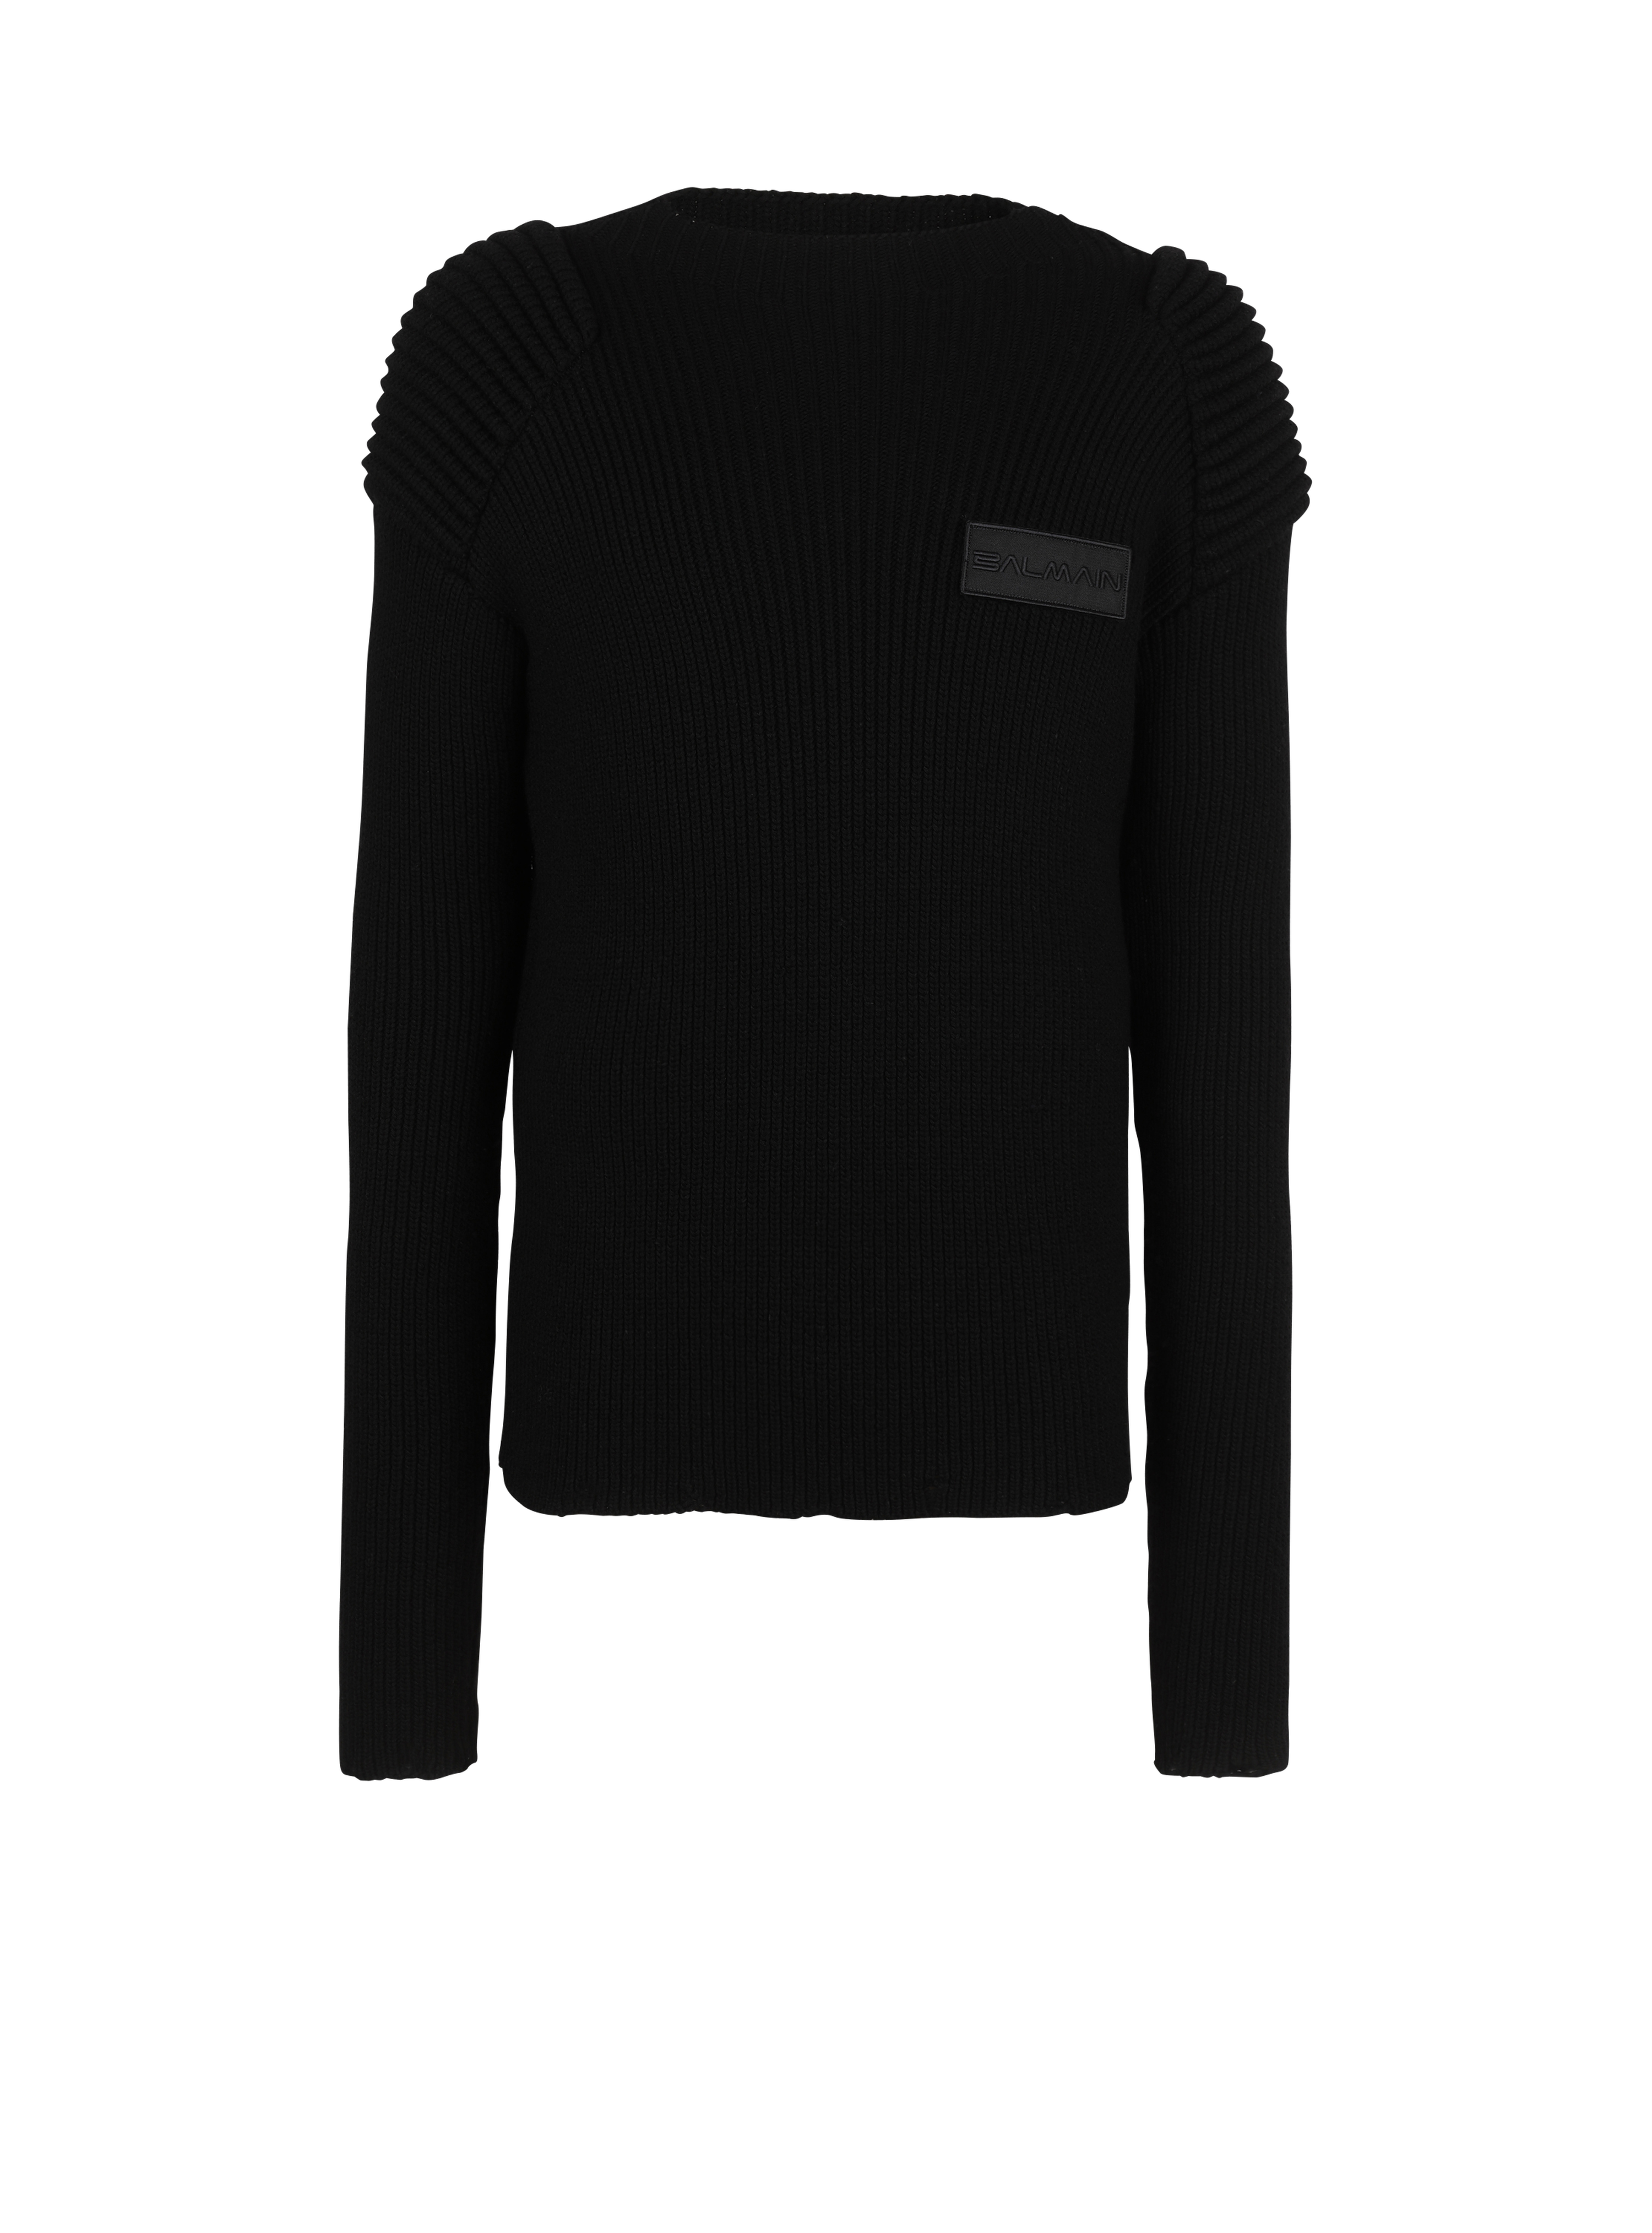 Wool jumper with Balmain logo, black